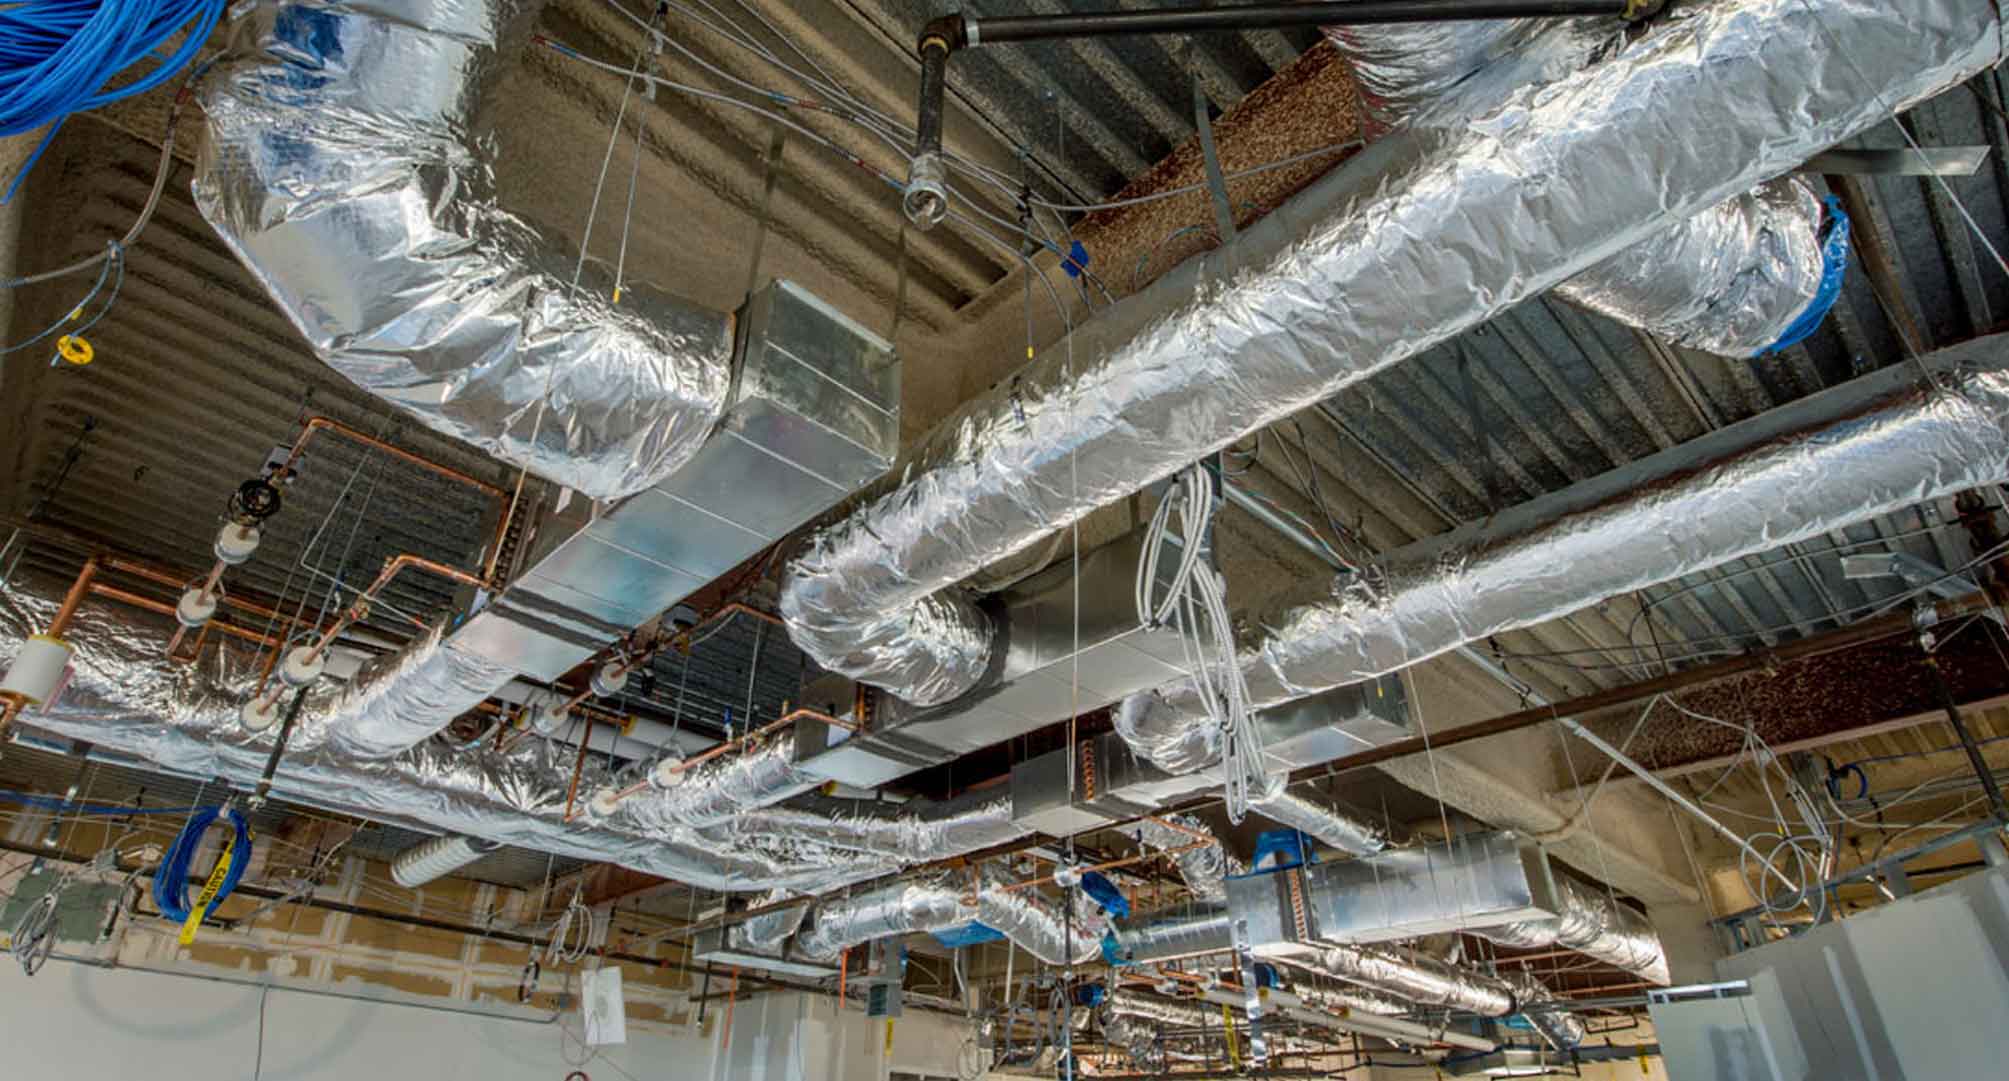 HVAC Duct Insulation Wrap, R8, 4' x 50' (200 Sq Ft)